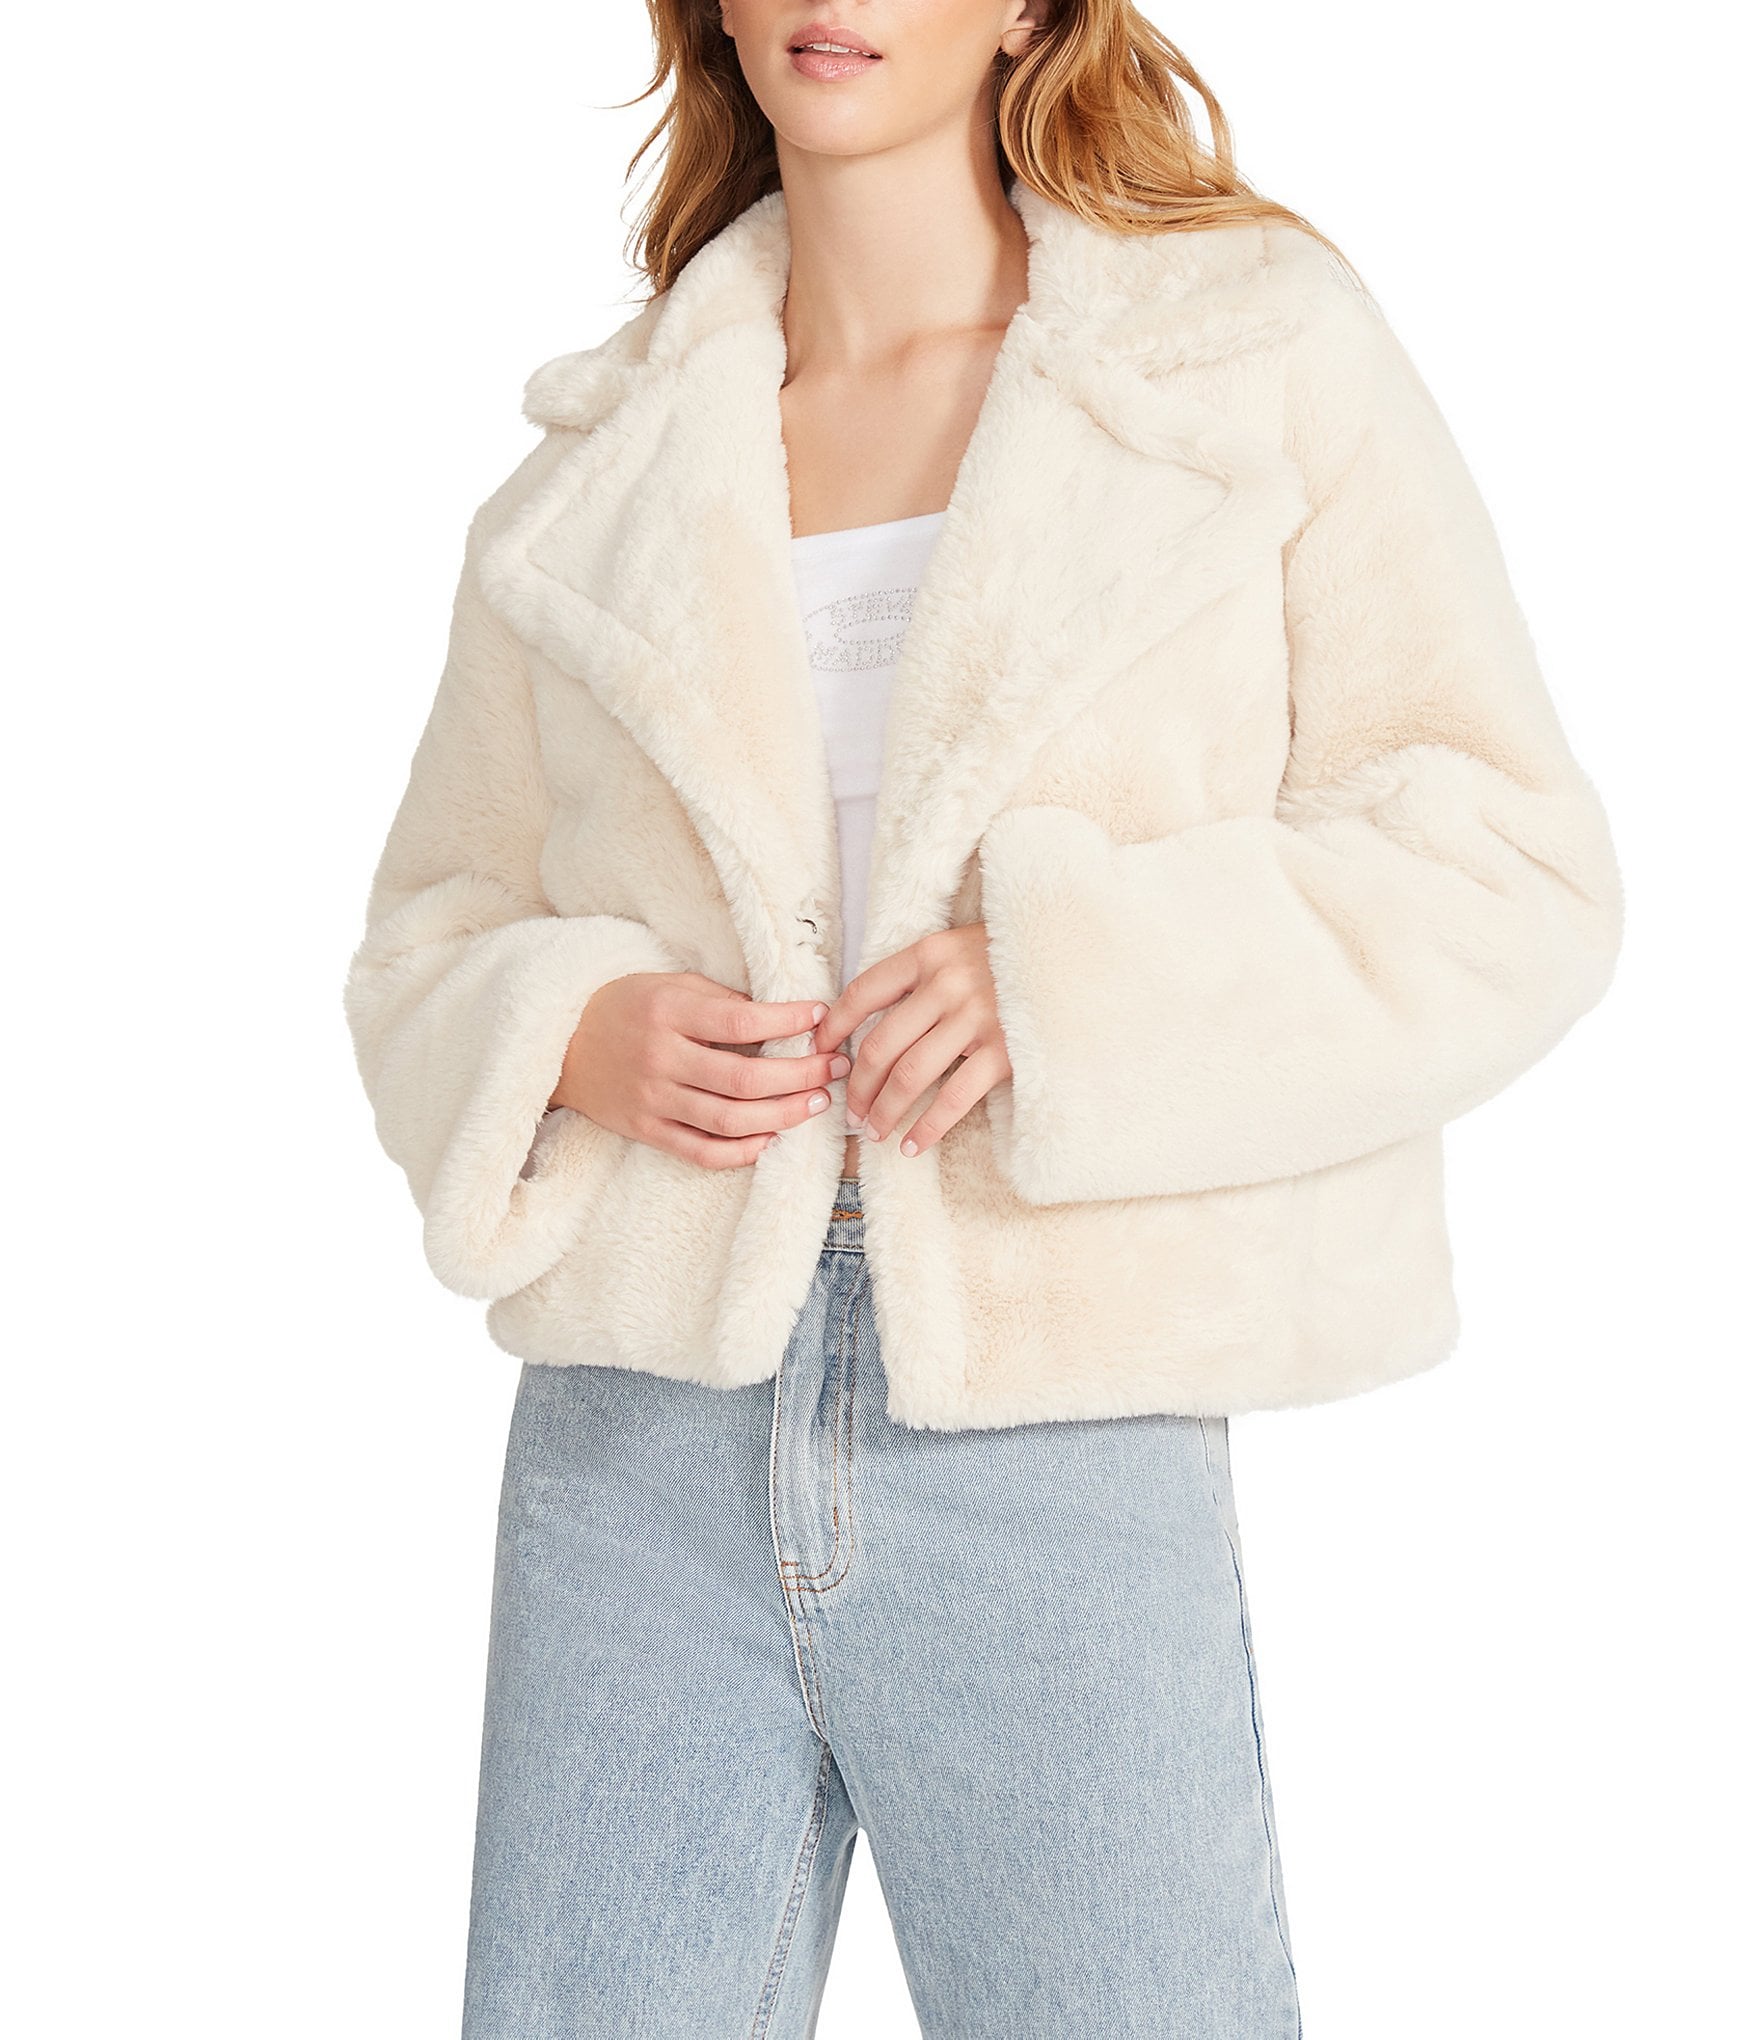 Fesfesfes Fashion Women Fleece Cropped Tops Lamb Zipper Coat Plush